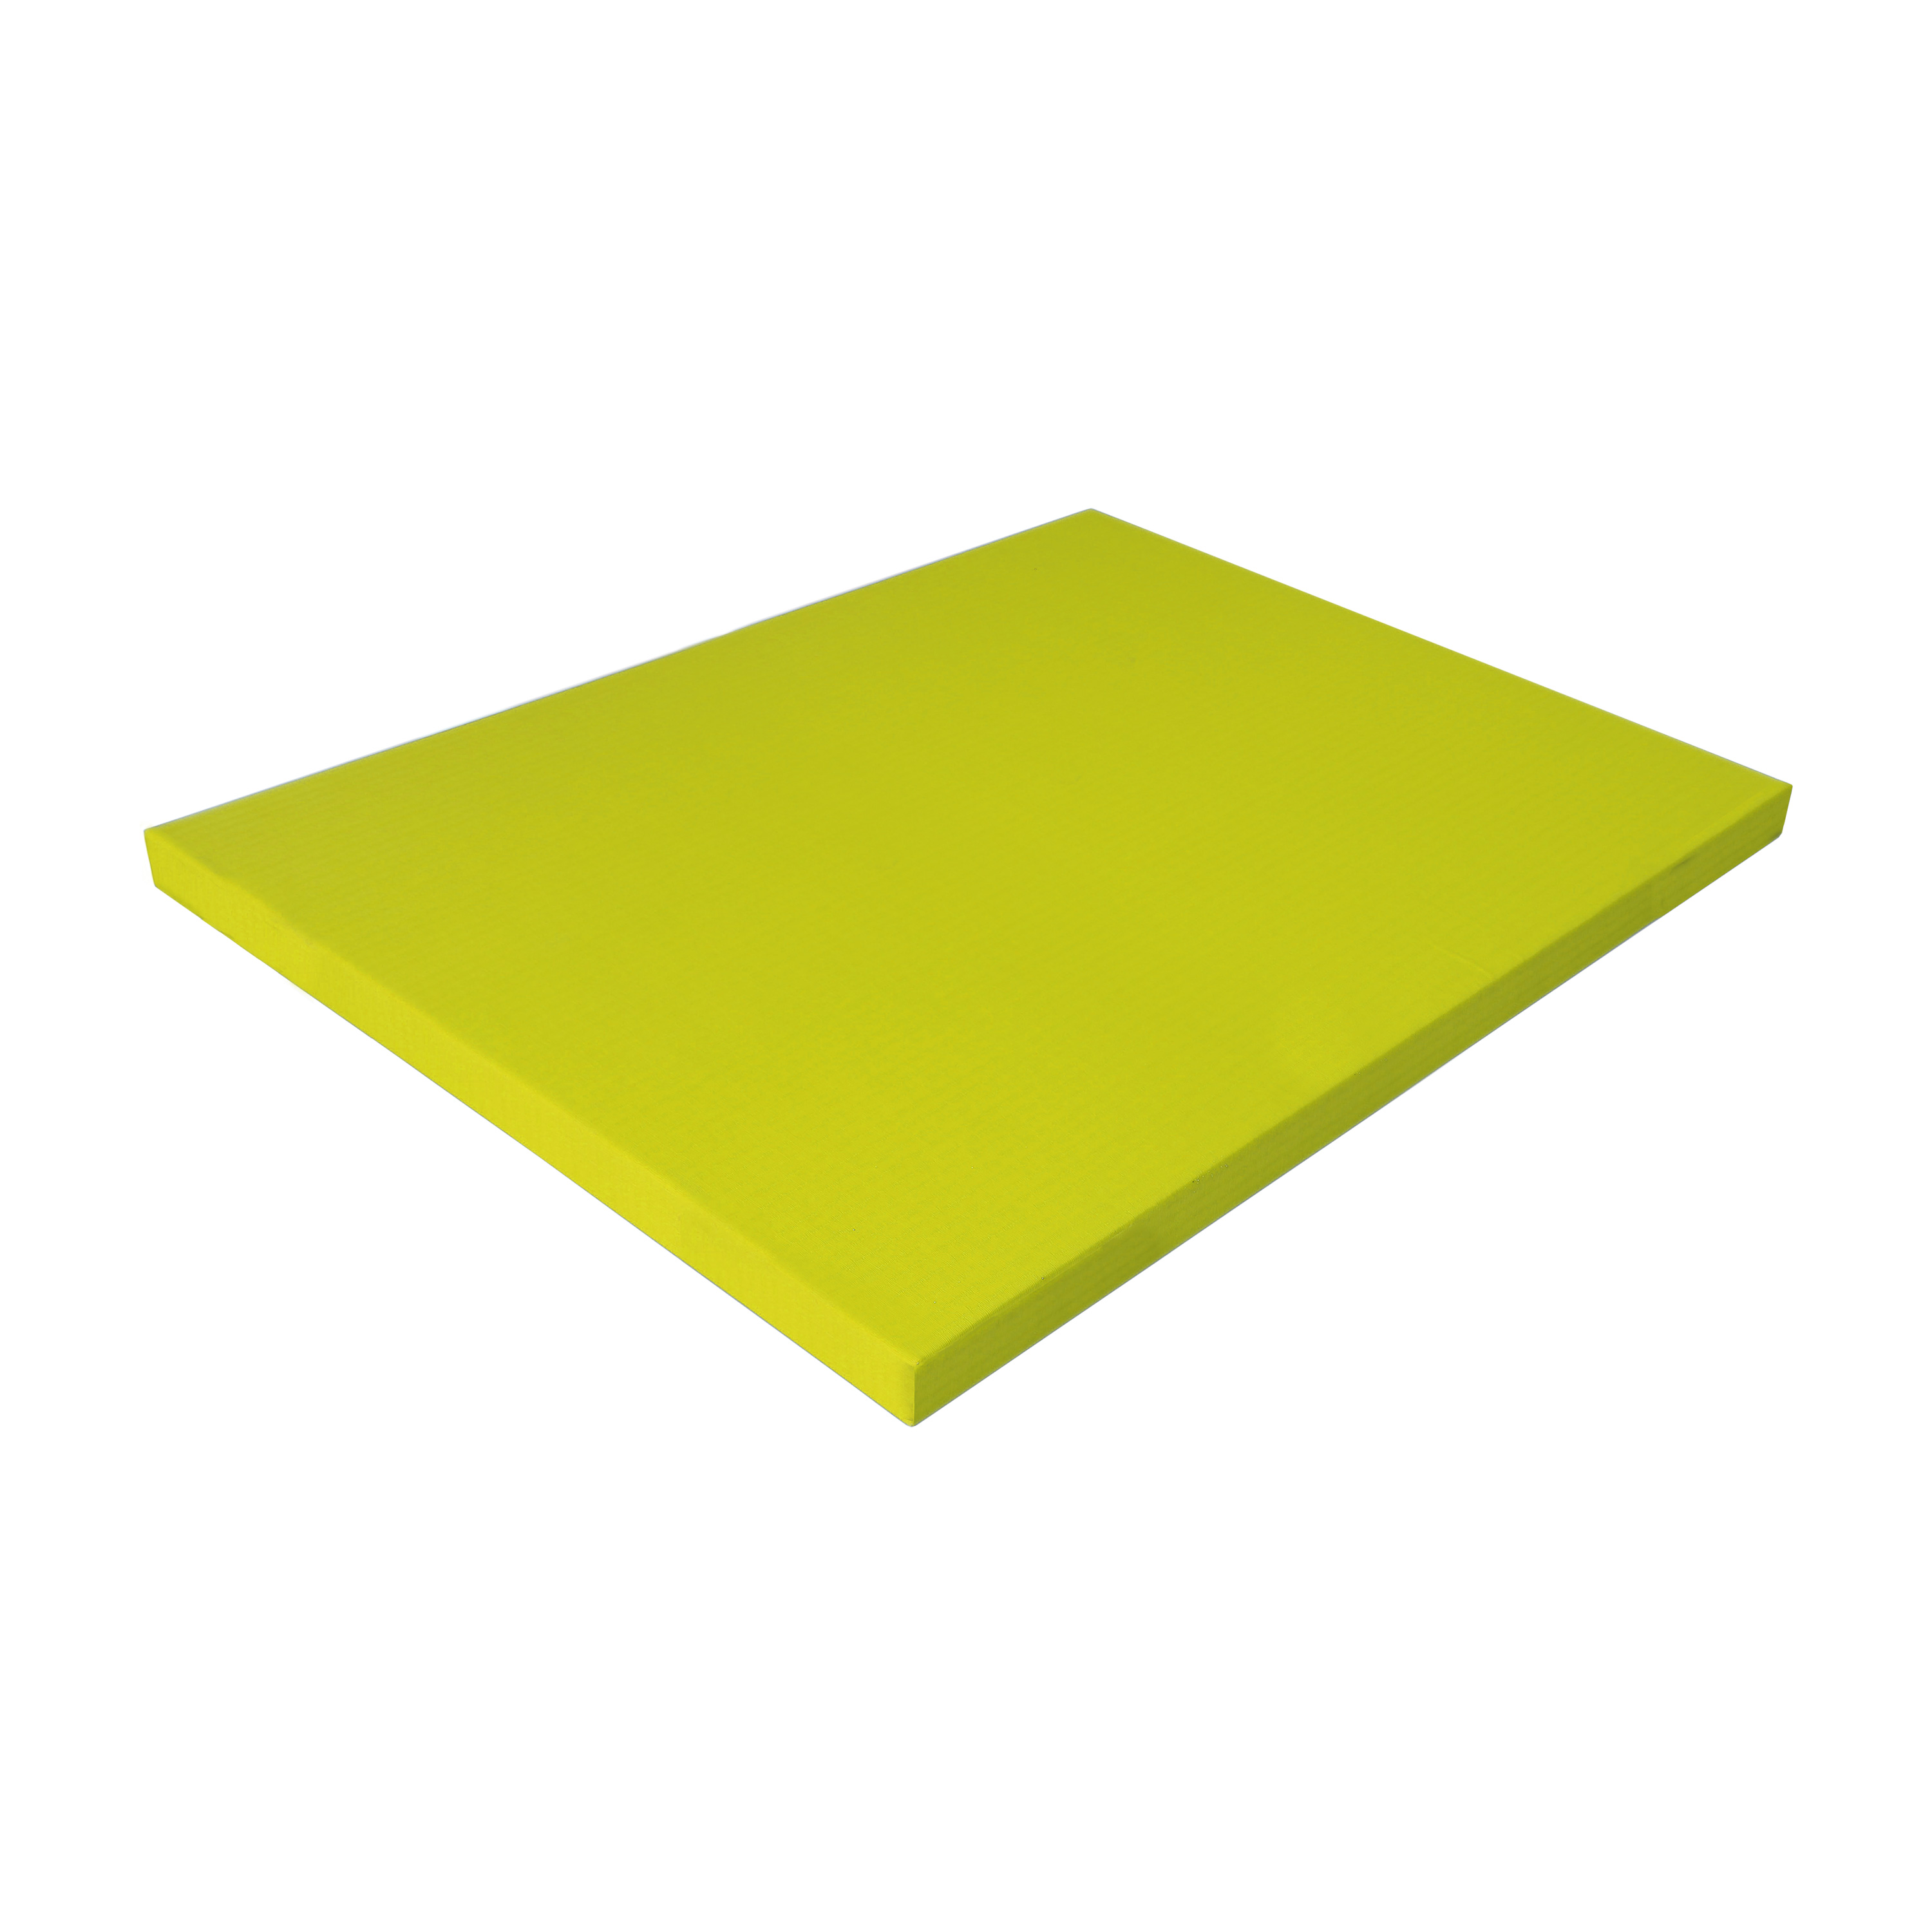 Fallschutzmatte 'Light' gelb, 150 x 100 x 6 cm, 5,1 kg